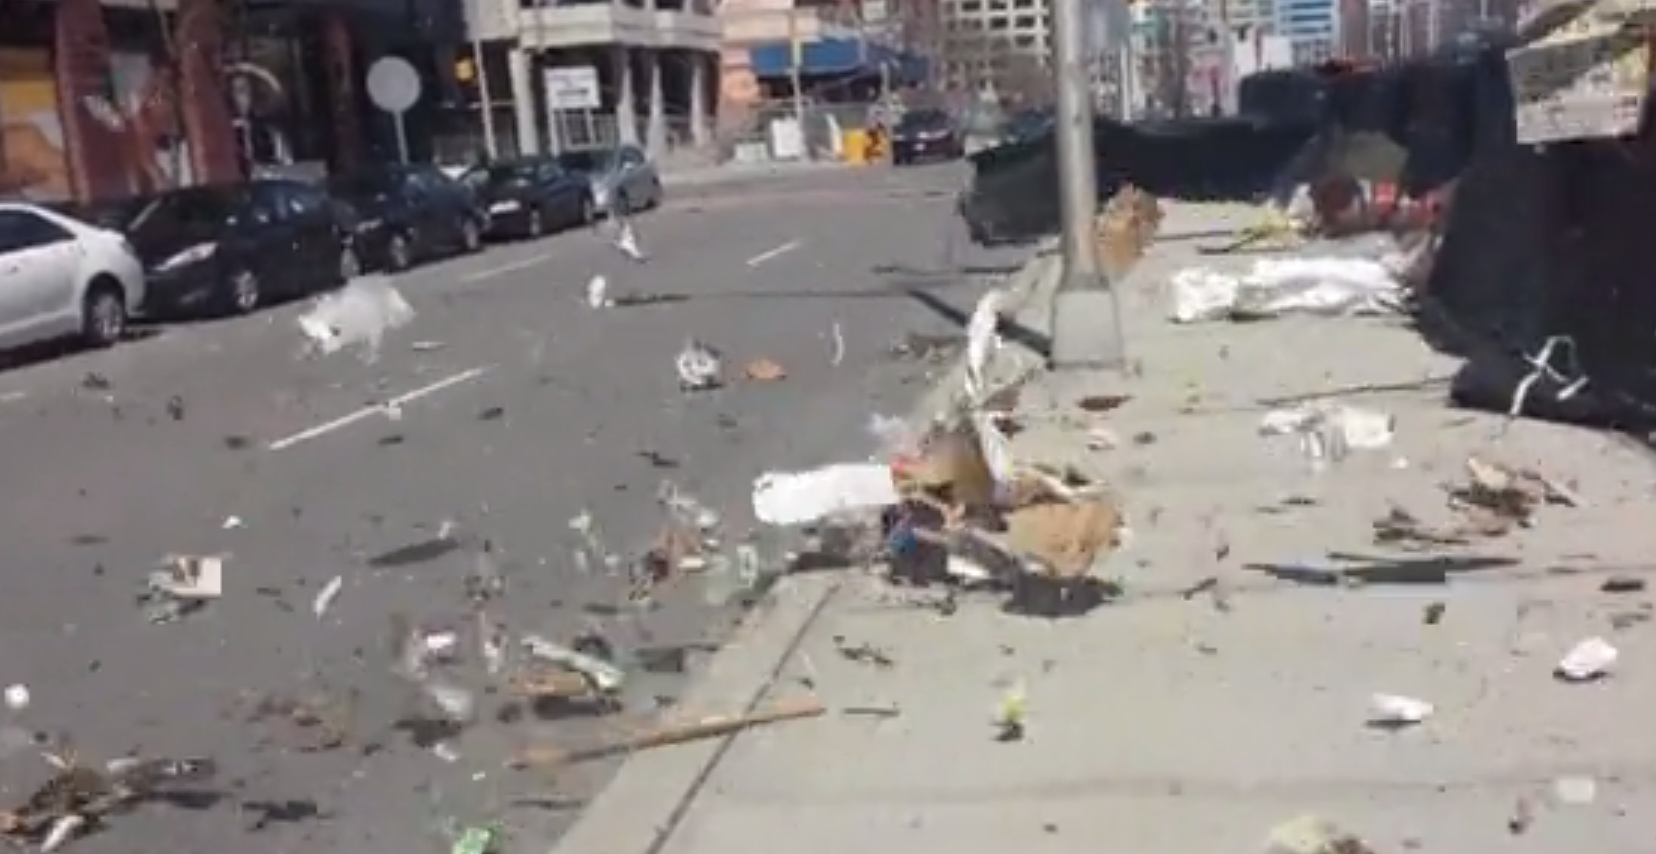 Garbage Tornado in Jersey City - my bad 